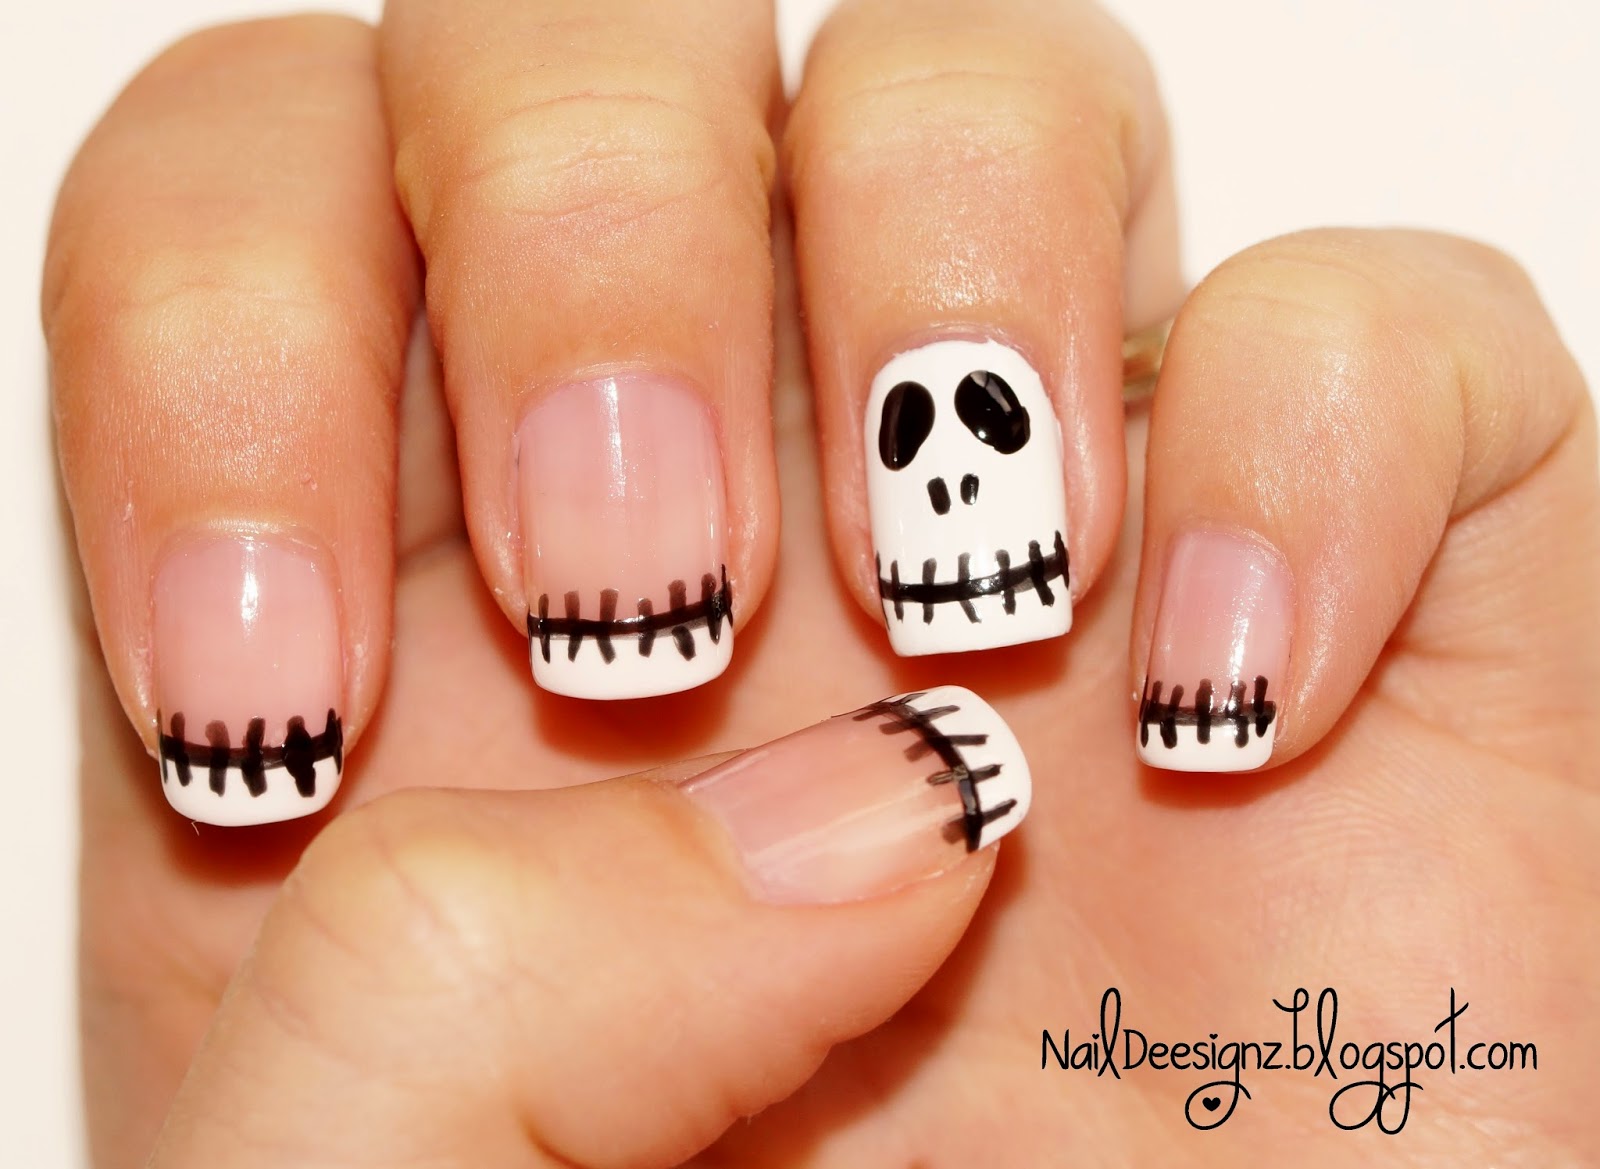 10. "Skeleton nail art designs" - wide 8